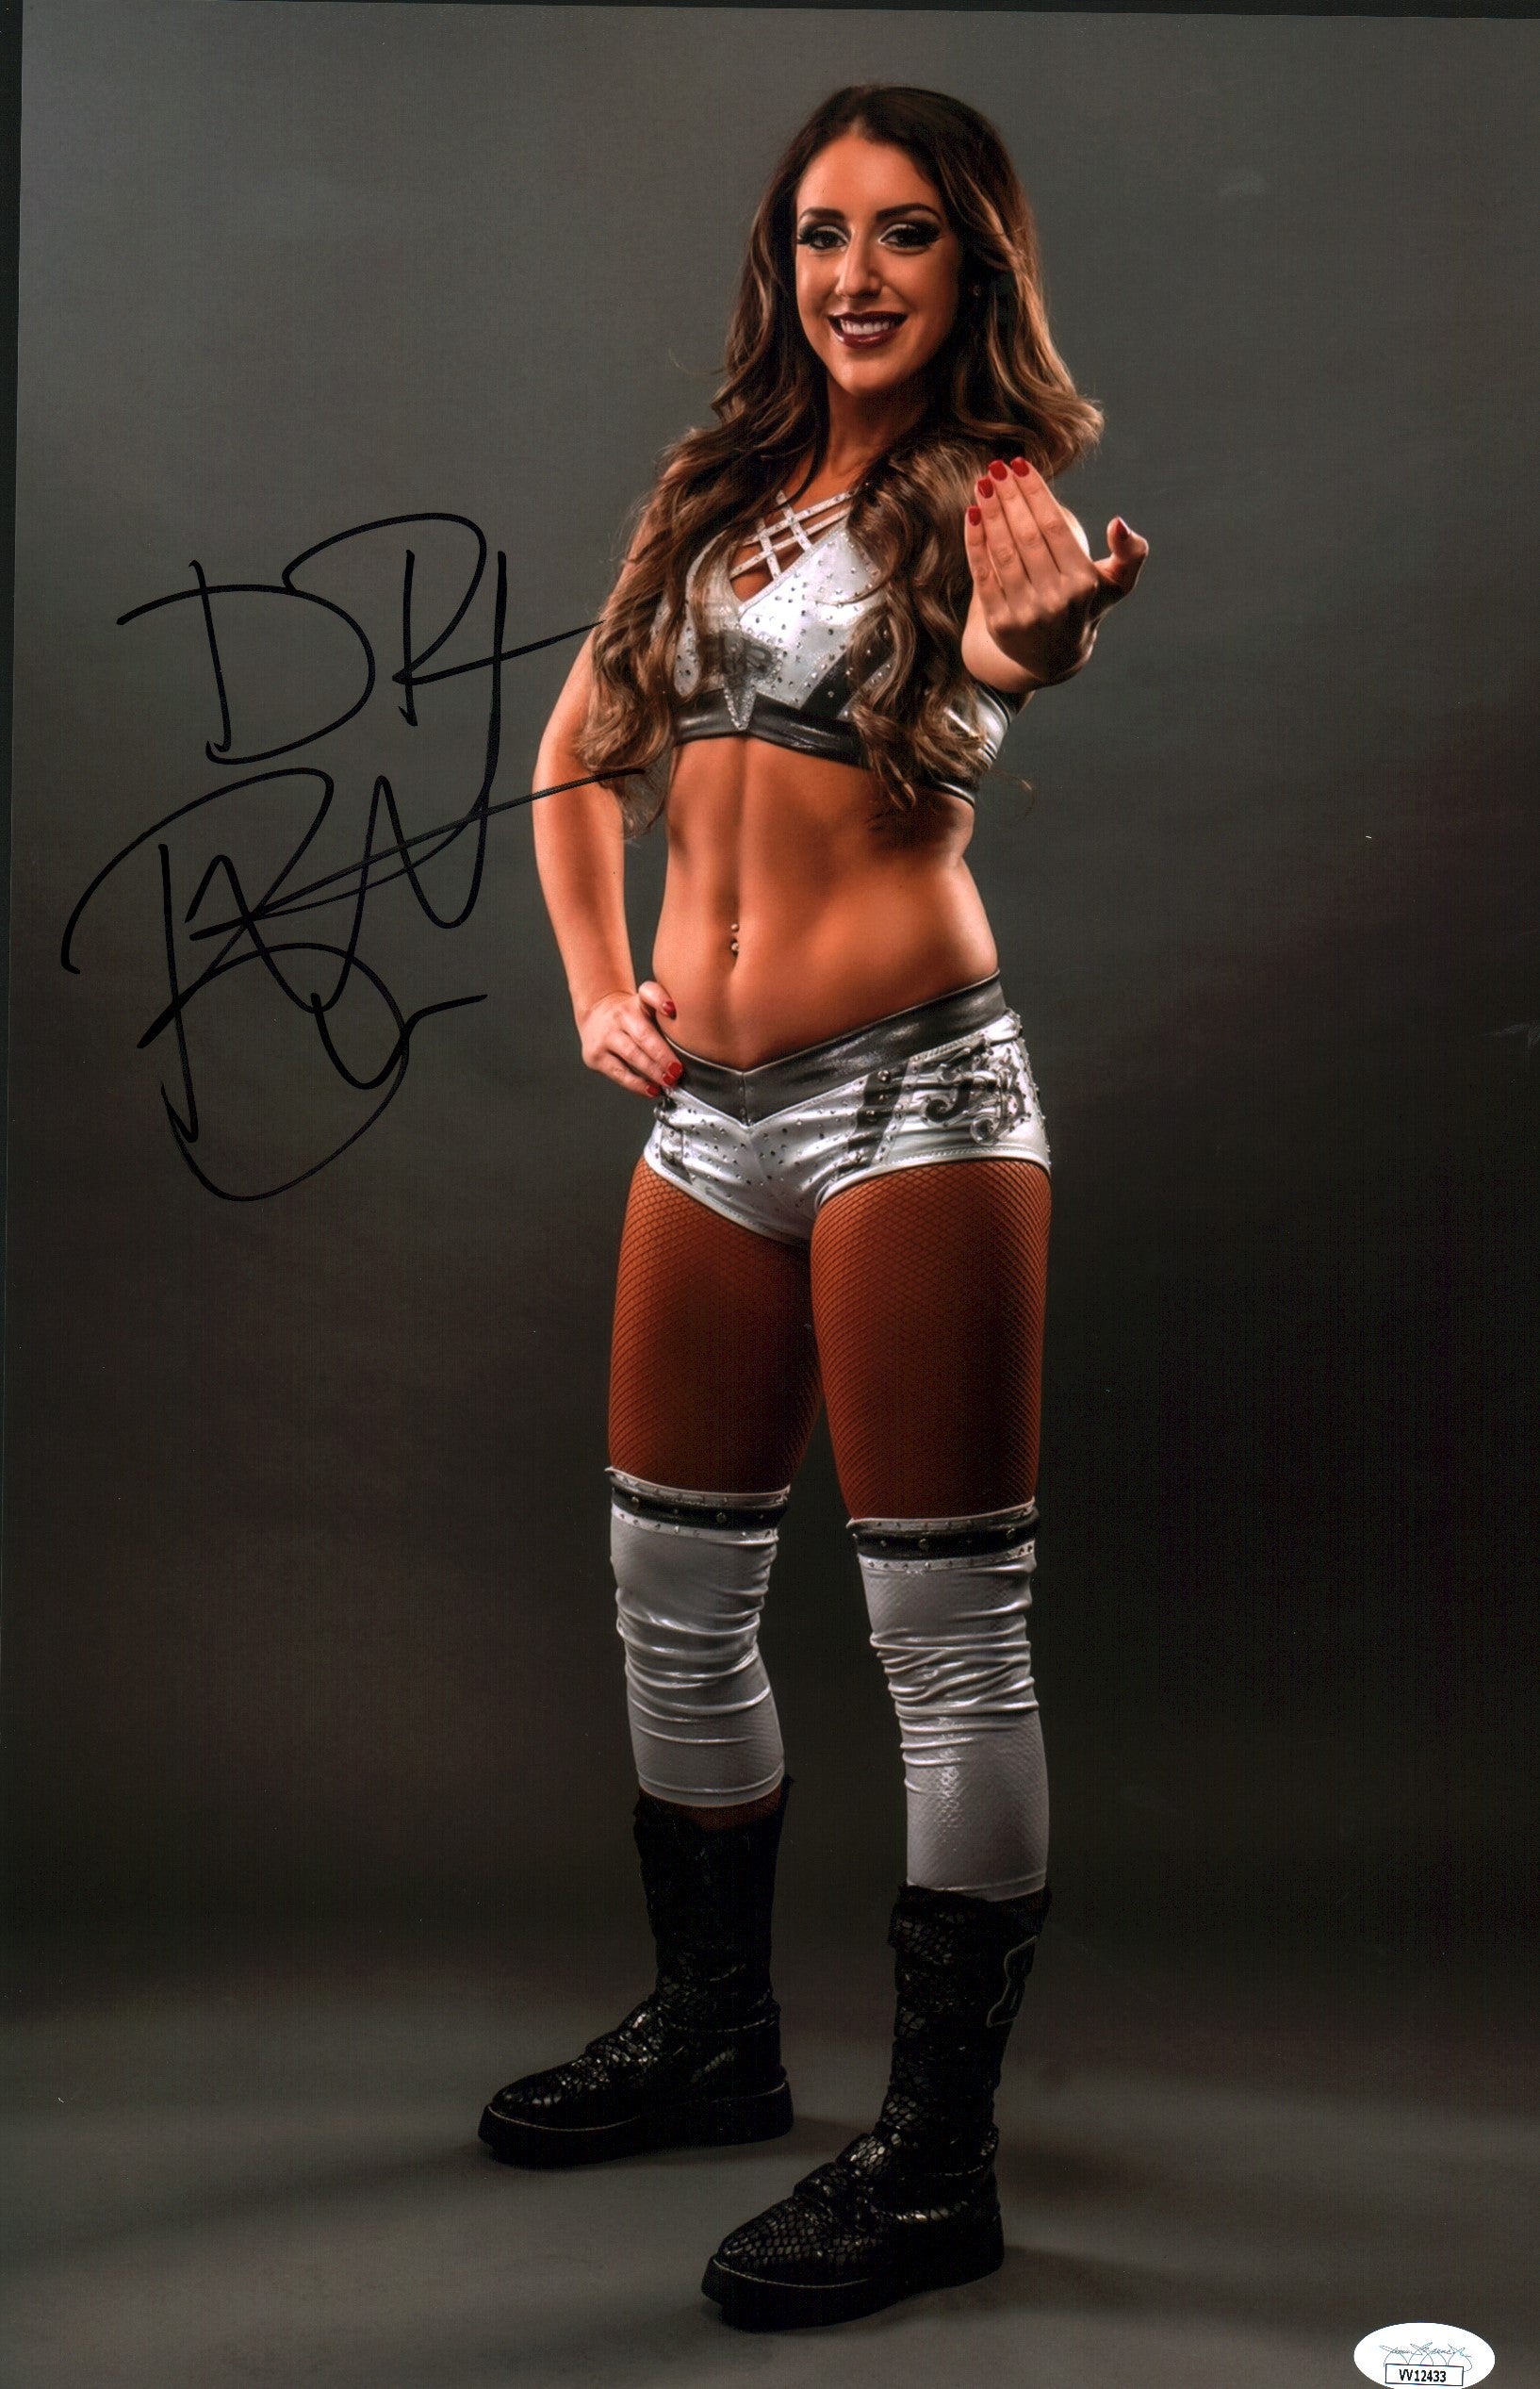 Britt Baker AEW Wrestling 11x17 Photo Poster Signed Autograph JSA Certified COA